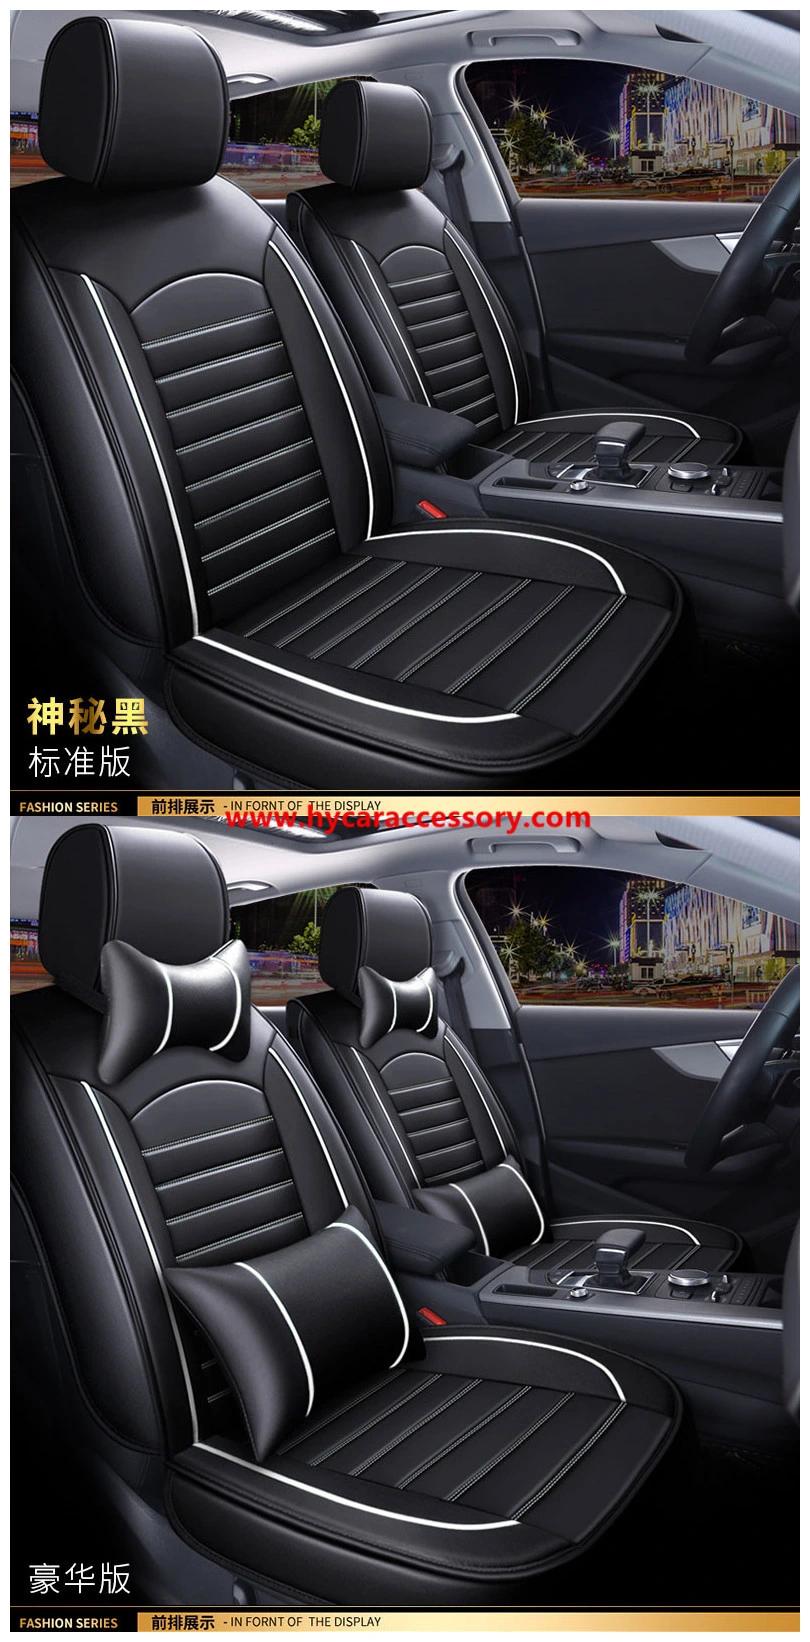 Car Accessories Car Decoration Car Seat Cushion Universal Beige PU Leather Auto Car Seat Cover